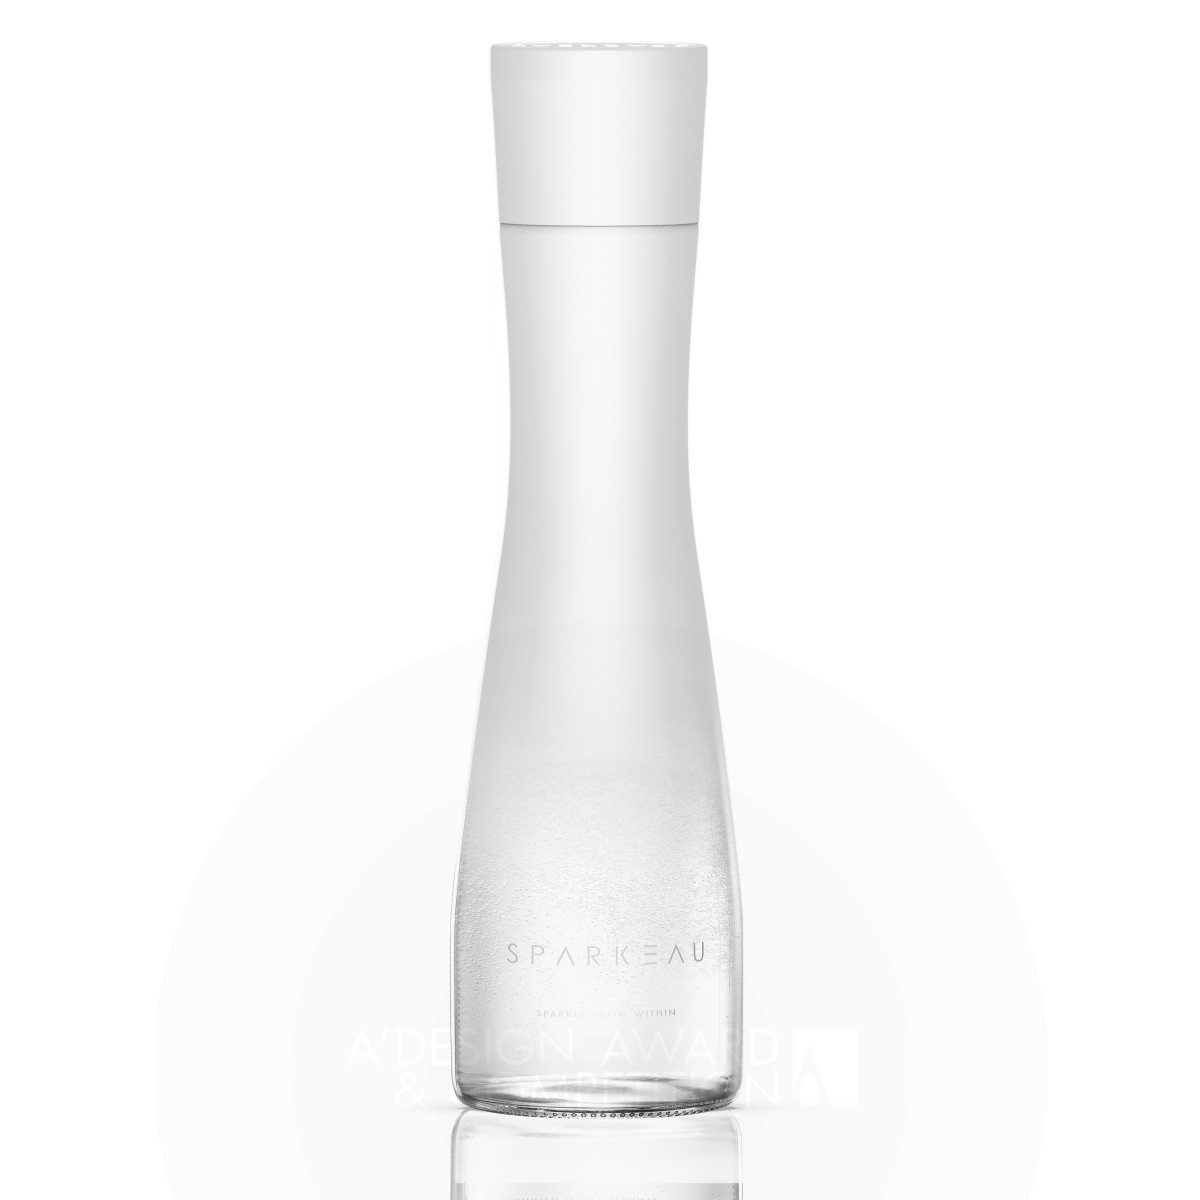  Sparkling Water Bottle